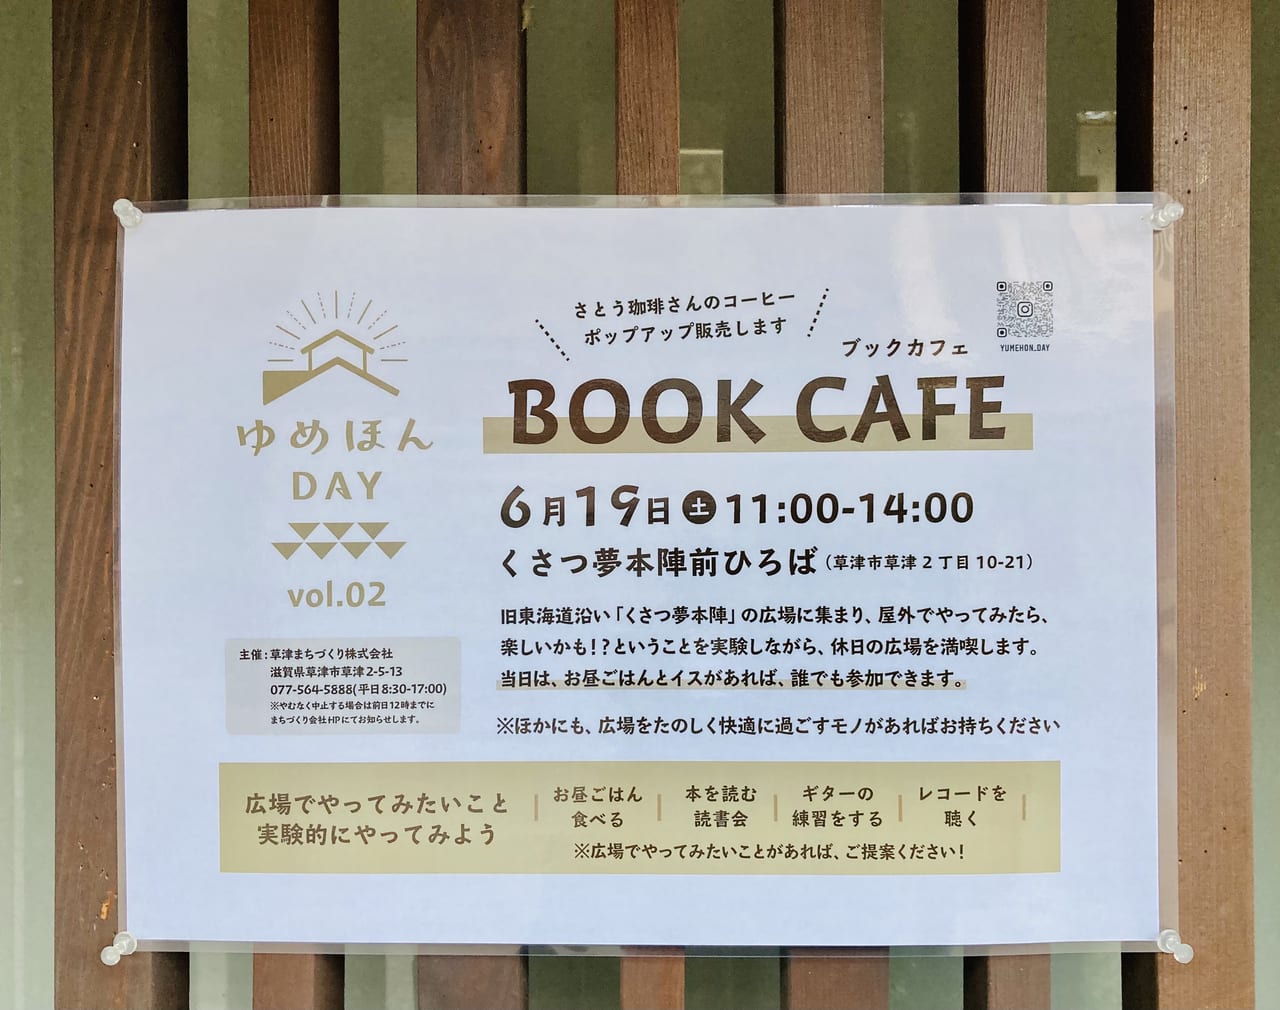 book cafe